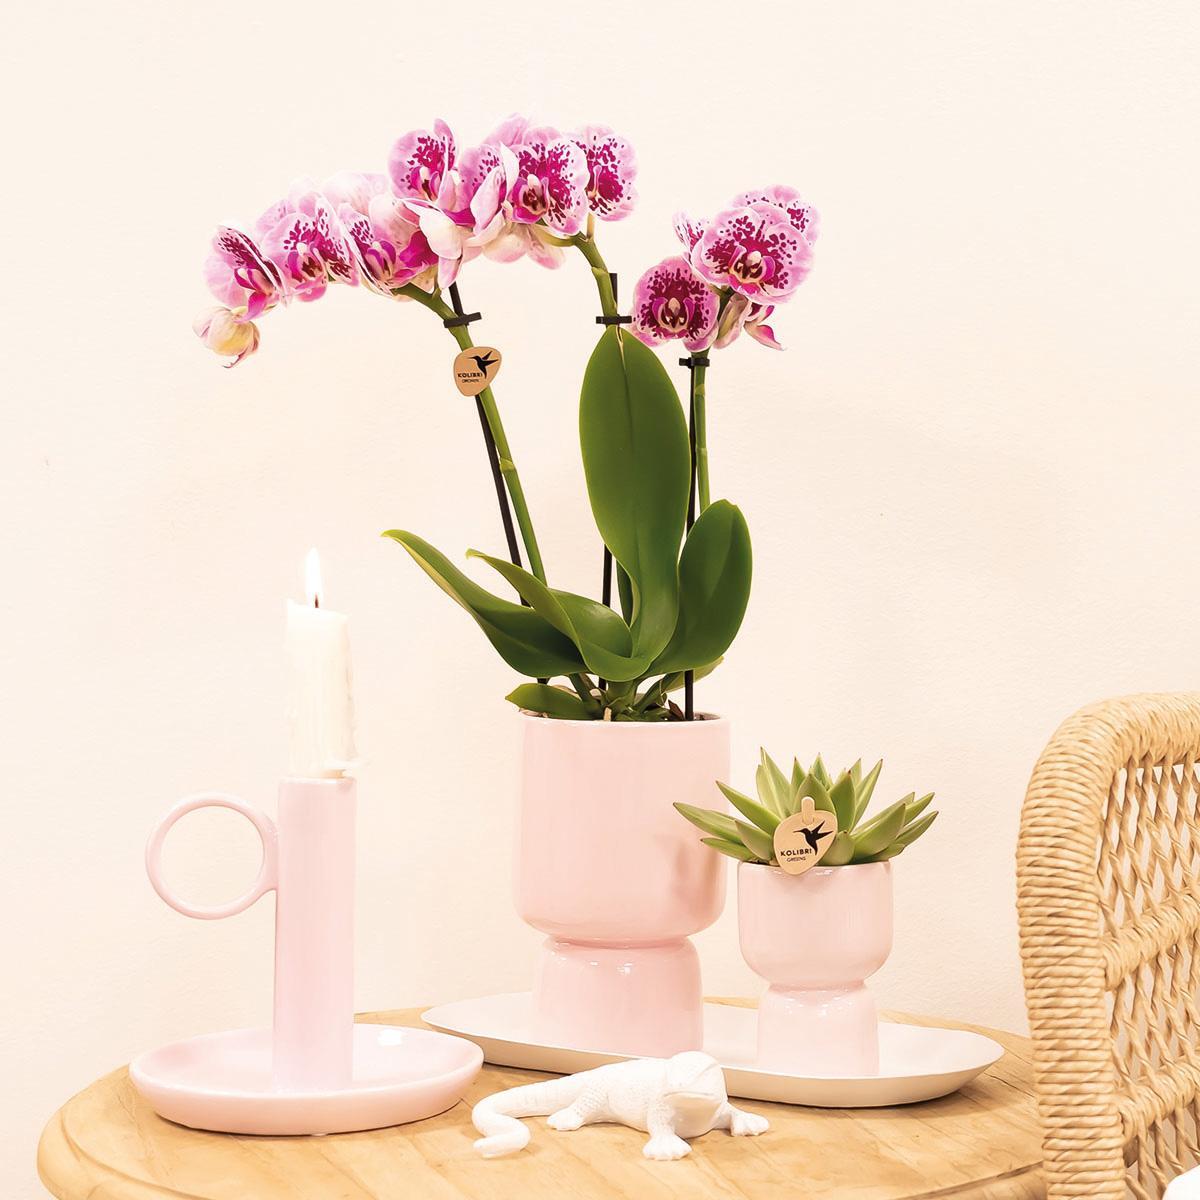 Kolibri Orchids | Plantenset Floral Blush pink small| Groene planten met Phalaenopsis orchidee in Floral Blush pink sierpotten en wit dienblad